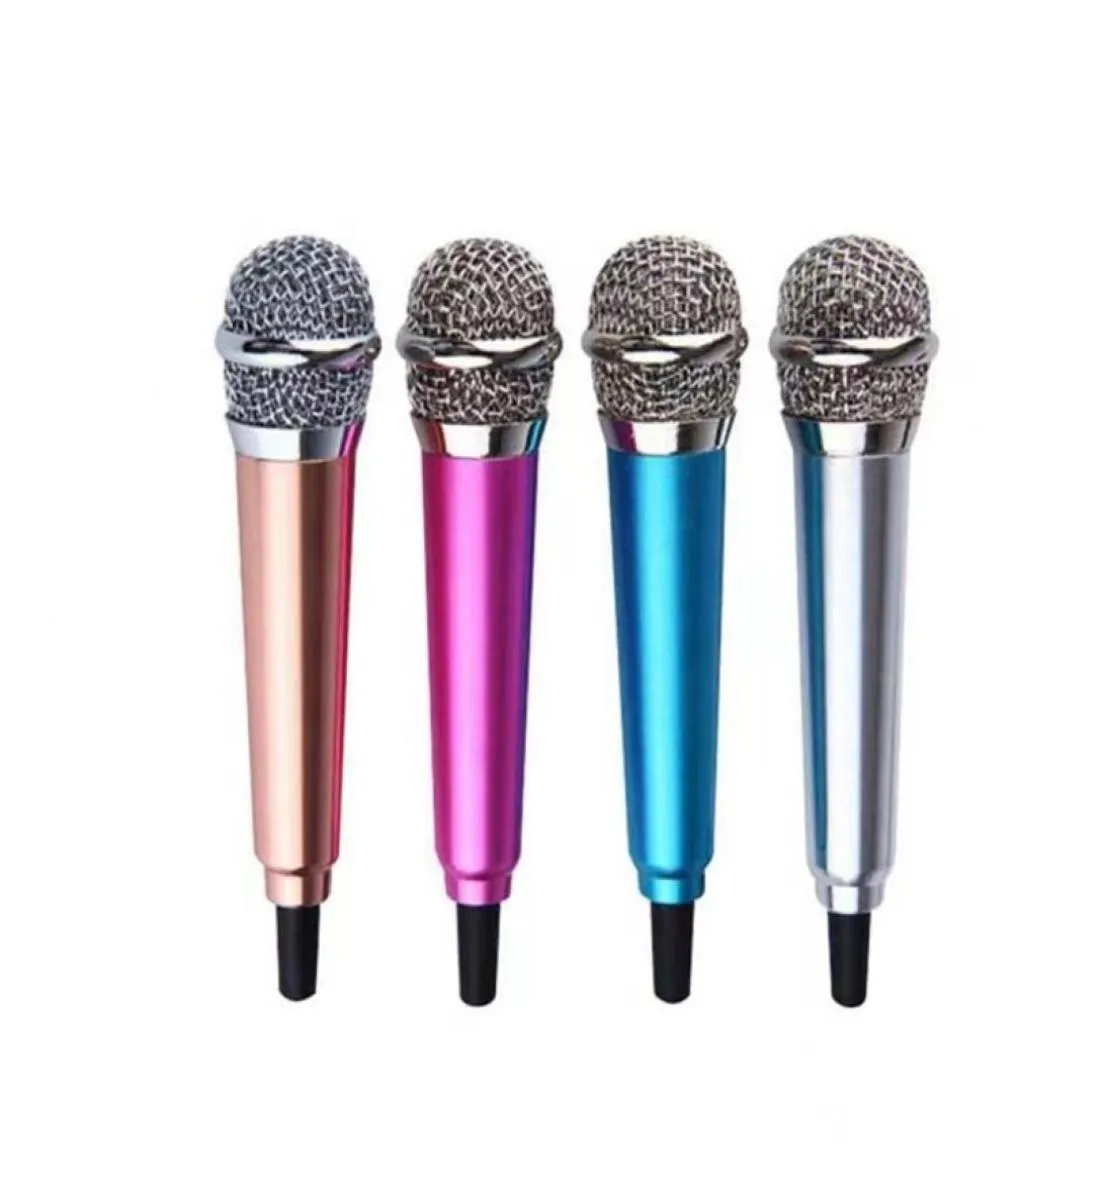 5 Mini Jack 35mm Studio Lavalier Professional Microfoon Party Supplies Handheld Mic voor mobiele telefooncomputer Karaoke HT0018233594